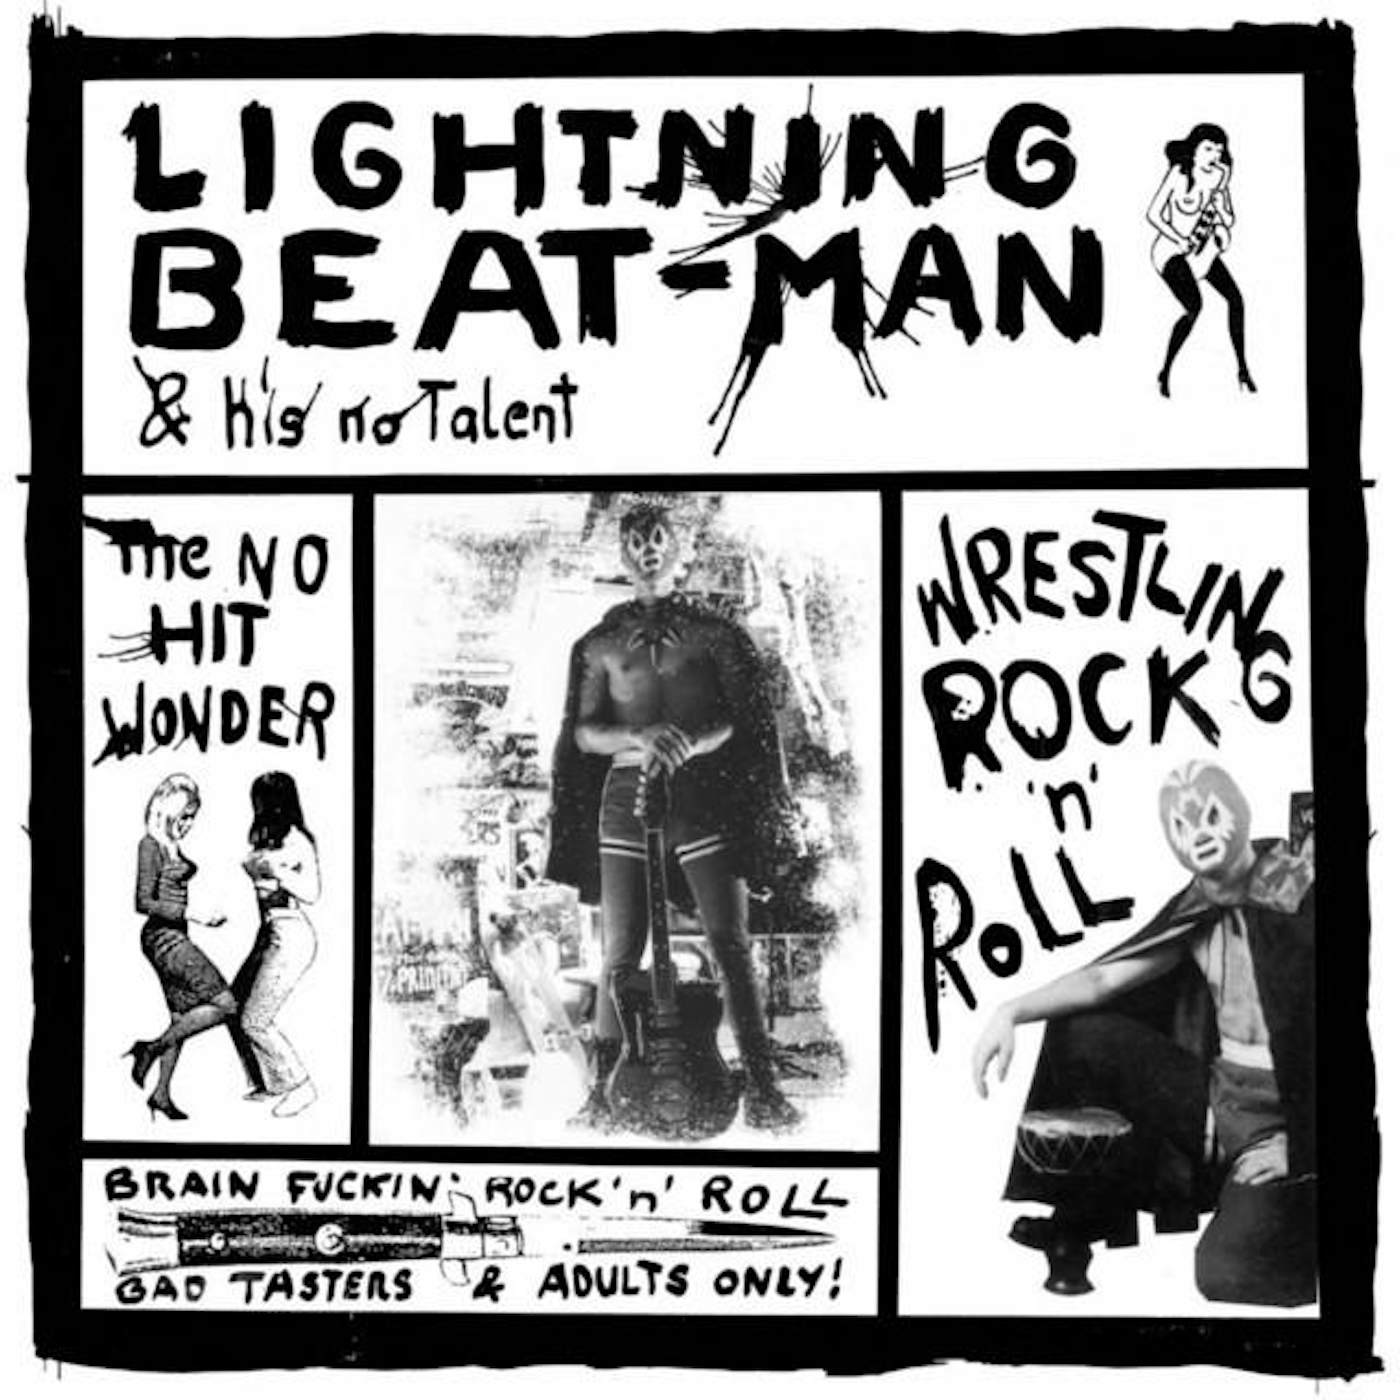 Lightning Beat-Man